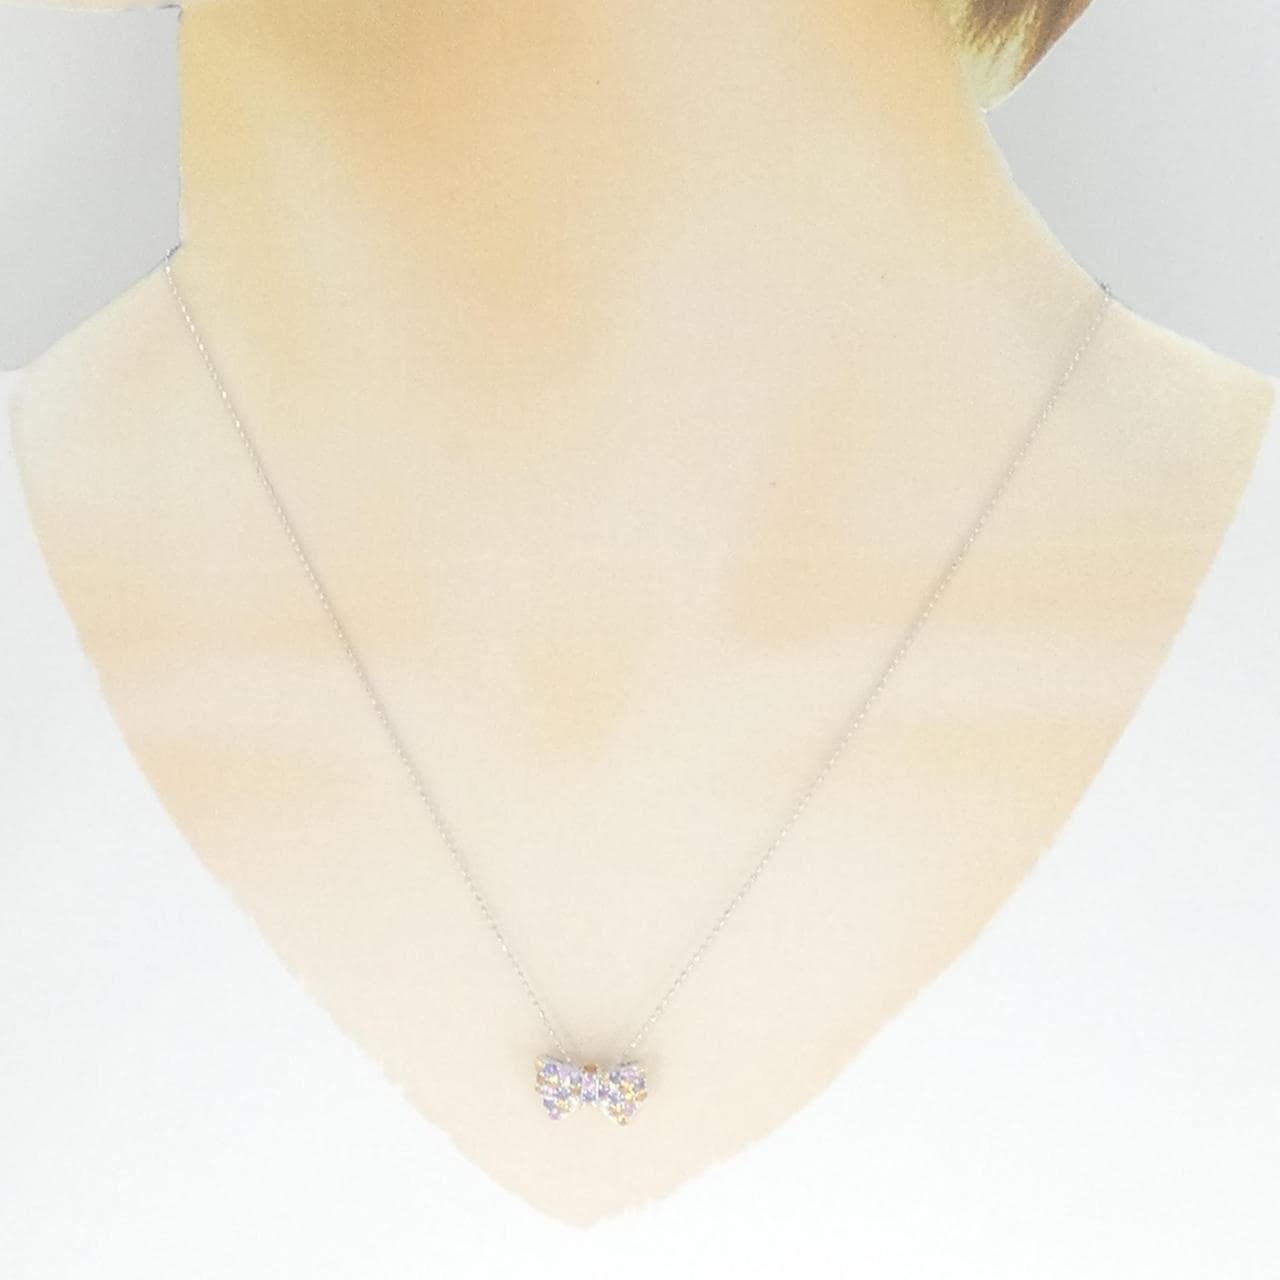 K18WG ribbon sapphire necklace